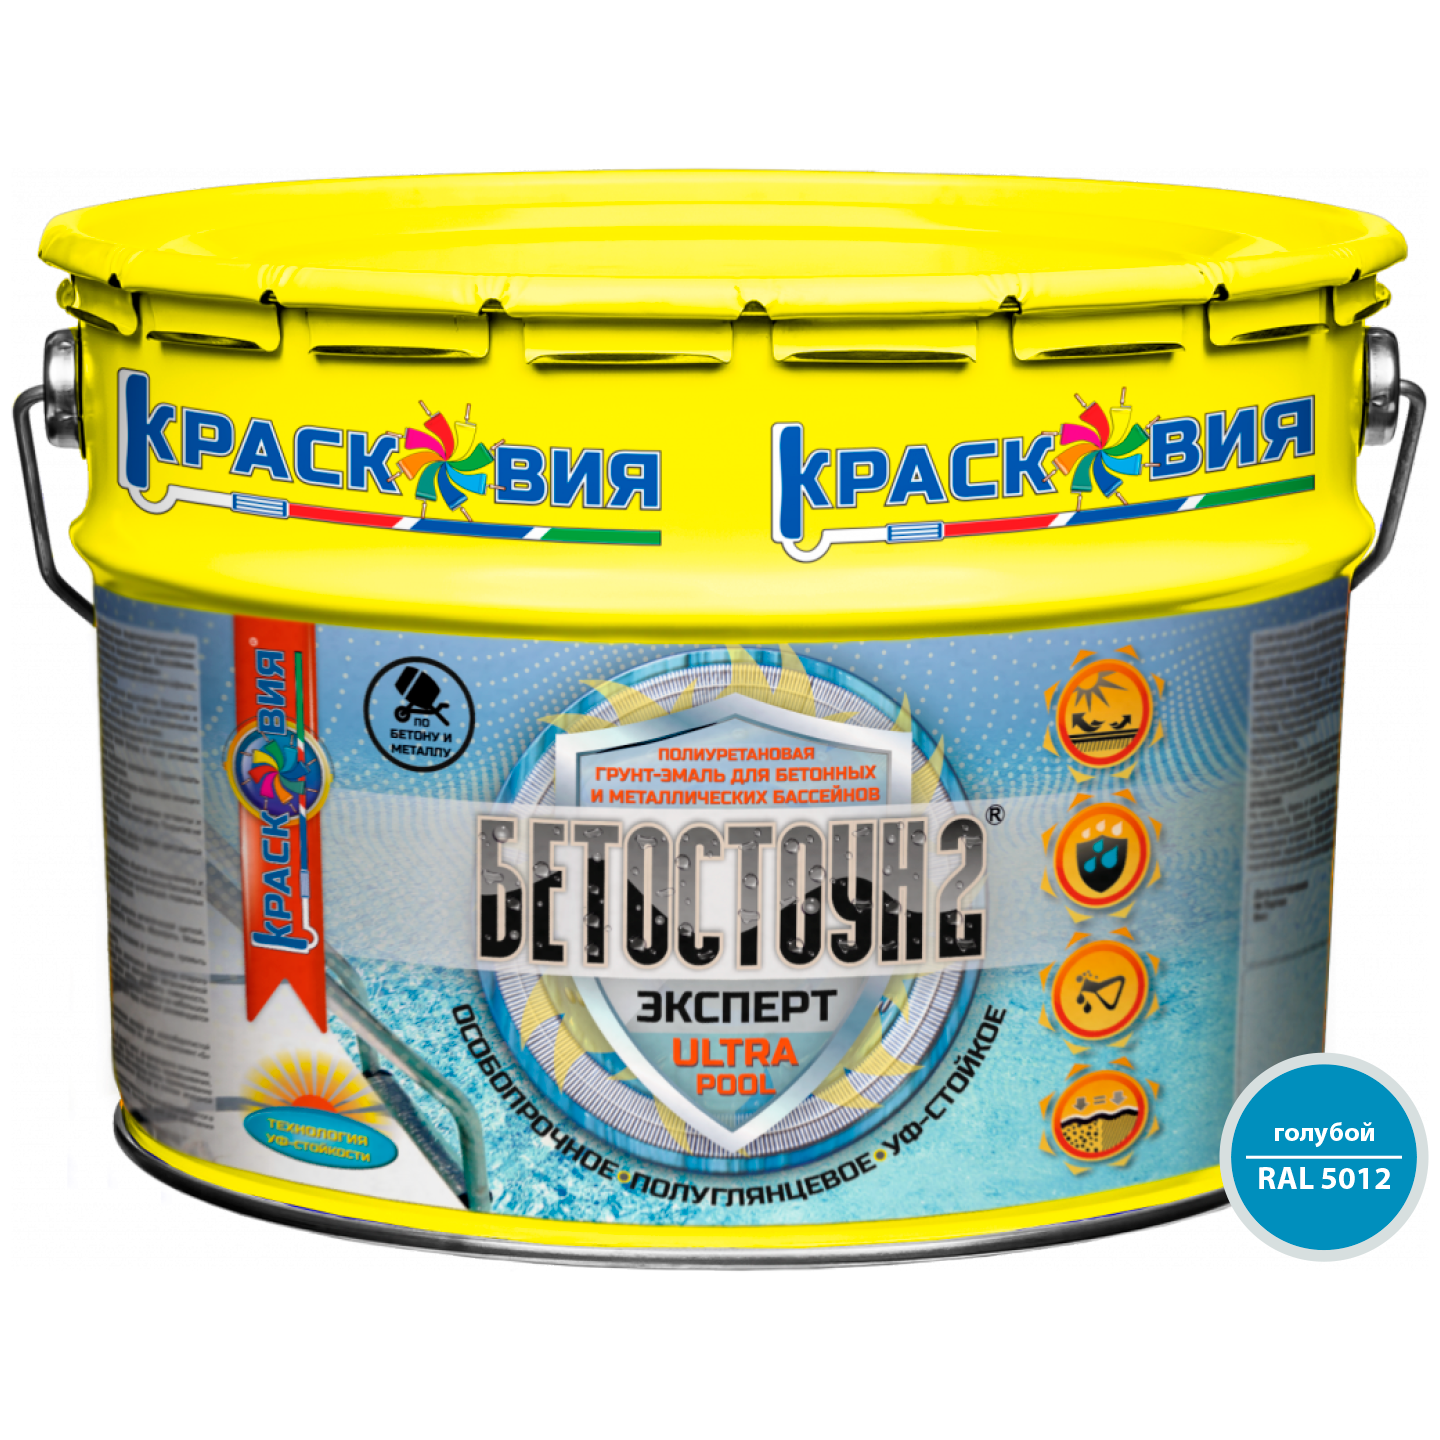 Полиуретановая краска для бассейна, Бетостоун-2 Эксперт ULTRAPOOL, RAL 5012, 10 кг